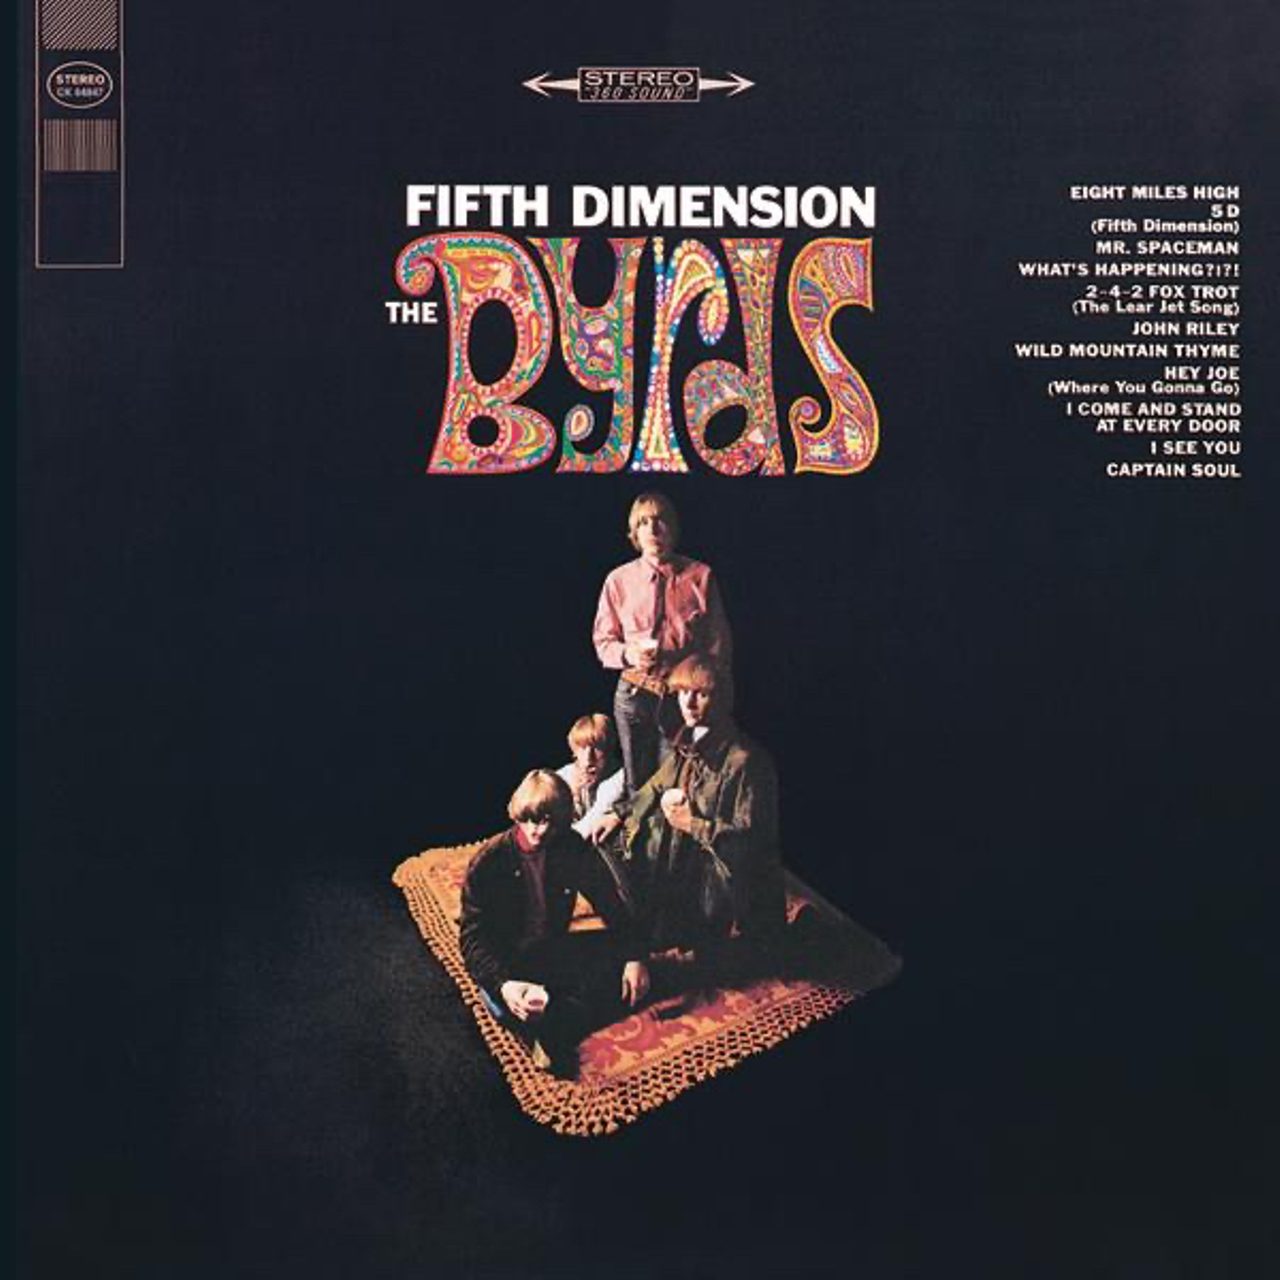 Byrds – Fifth Dimension cover album